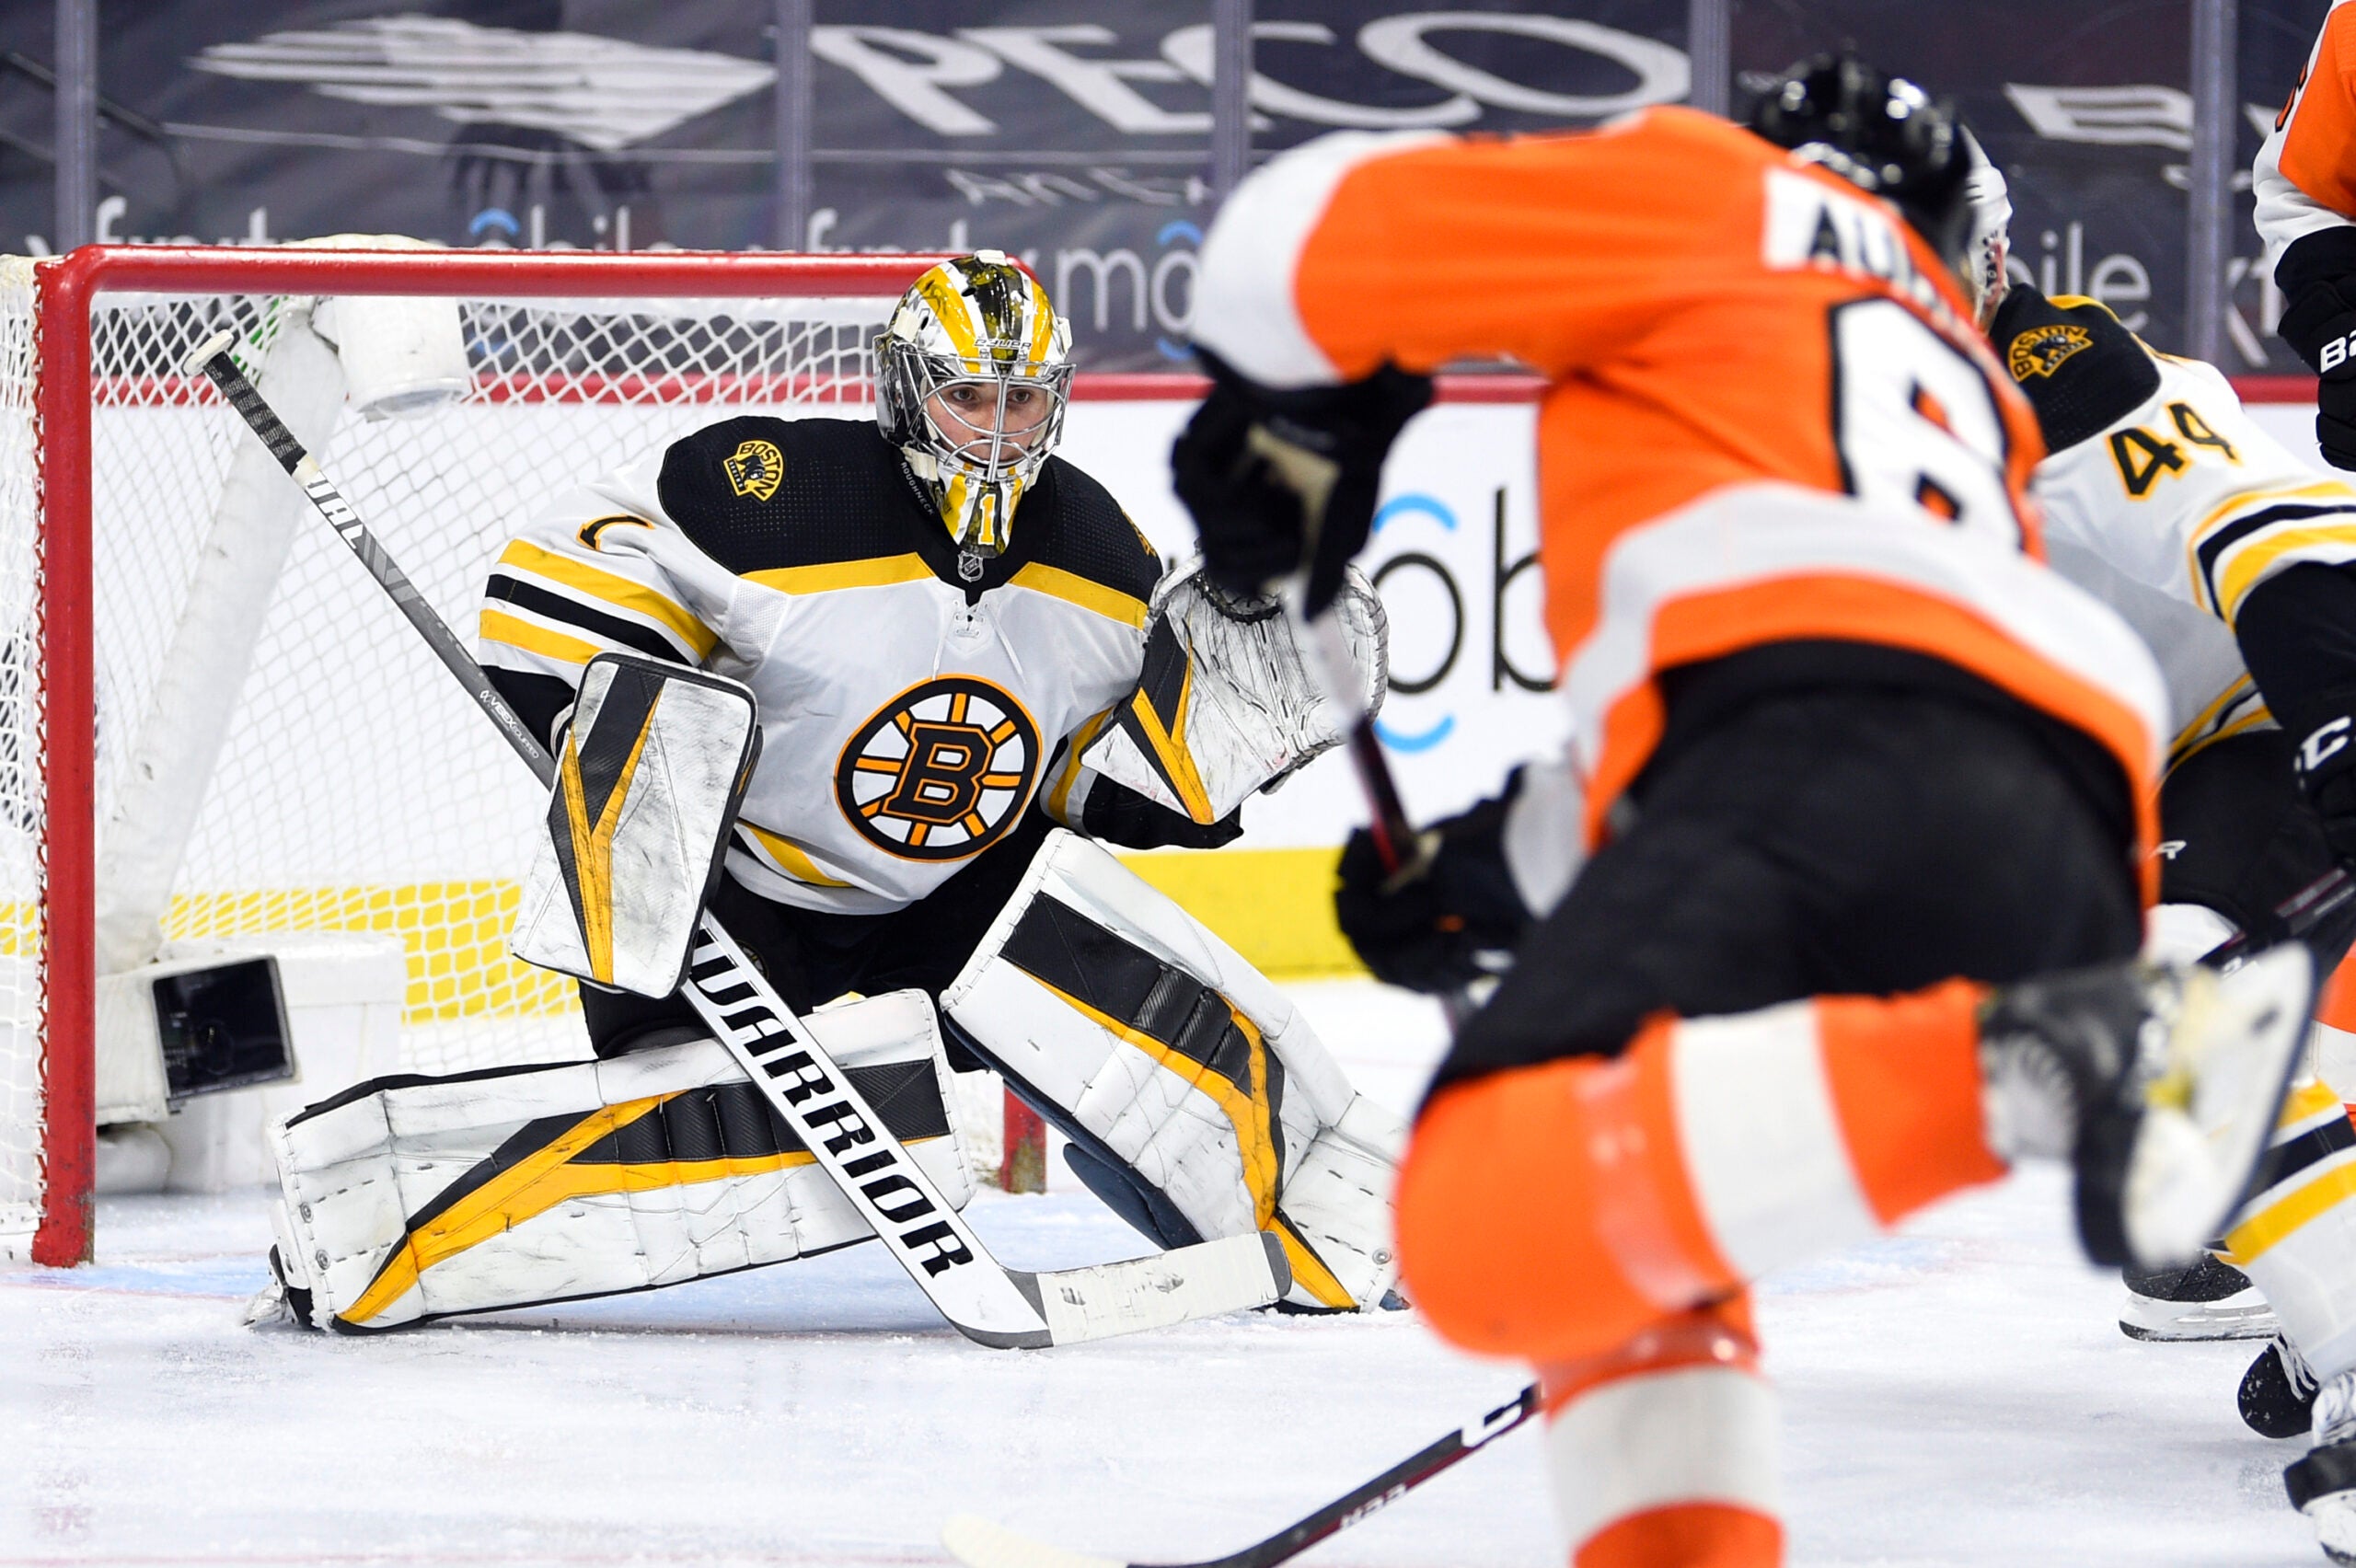 Watch Bruins' Brandon Carlo Make Sweet Save To Keep Senators Off Board 